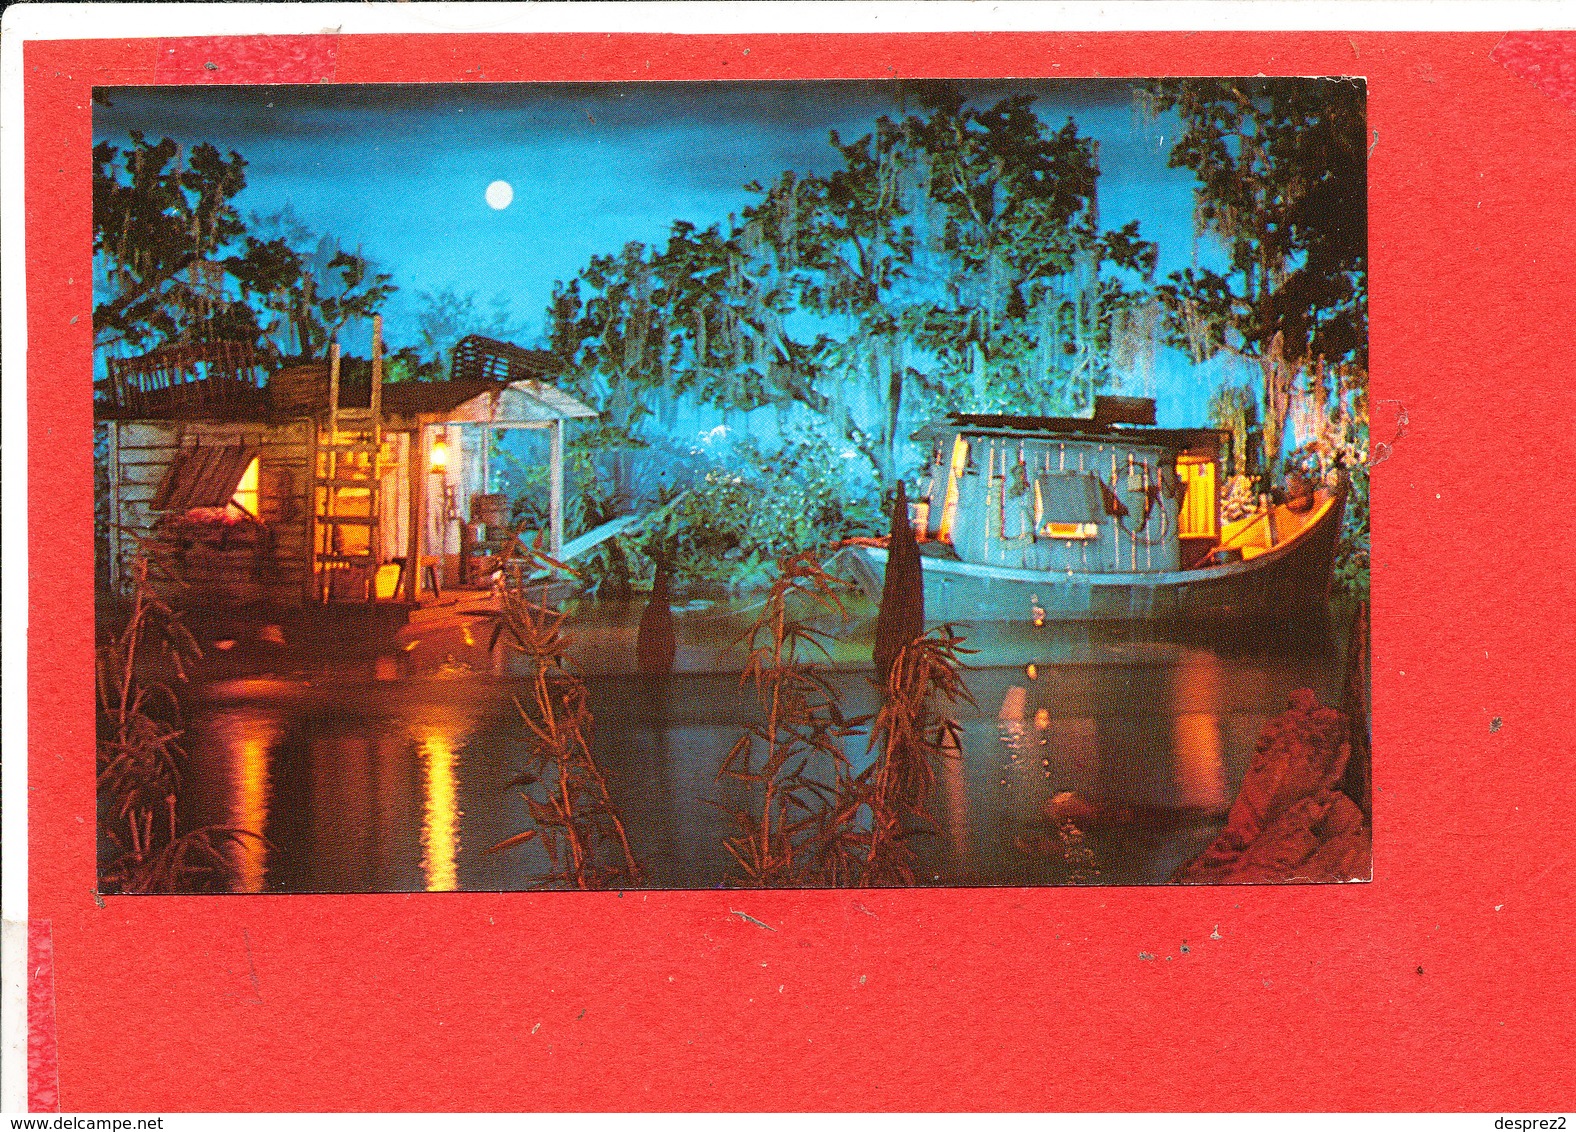 DISNEYLAND DISNEY Post Card Descriptif Au Verso - Disneyland